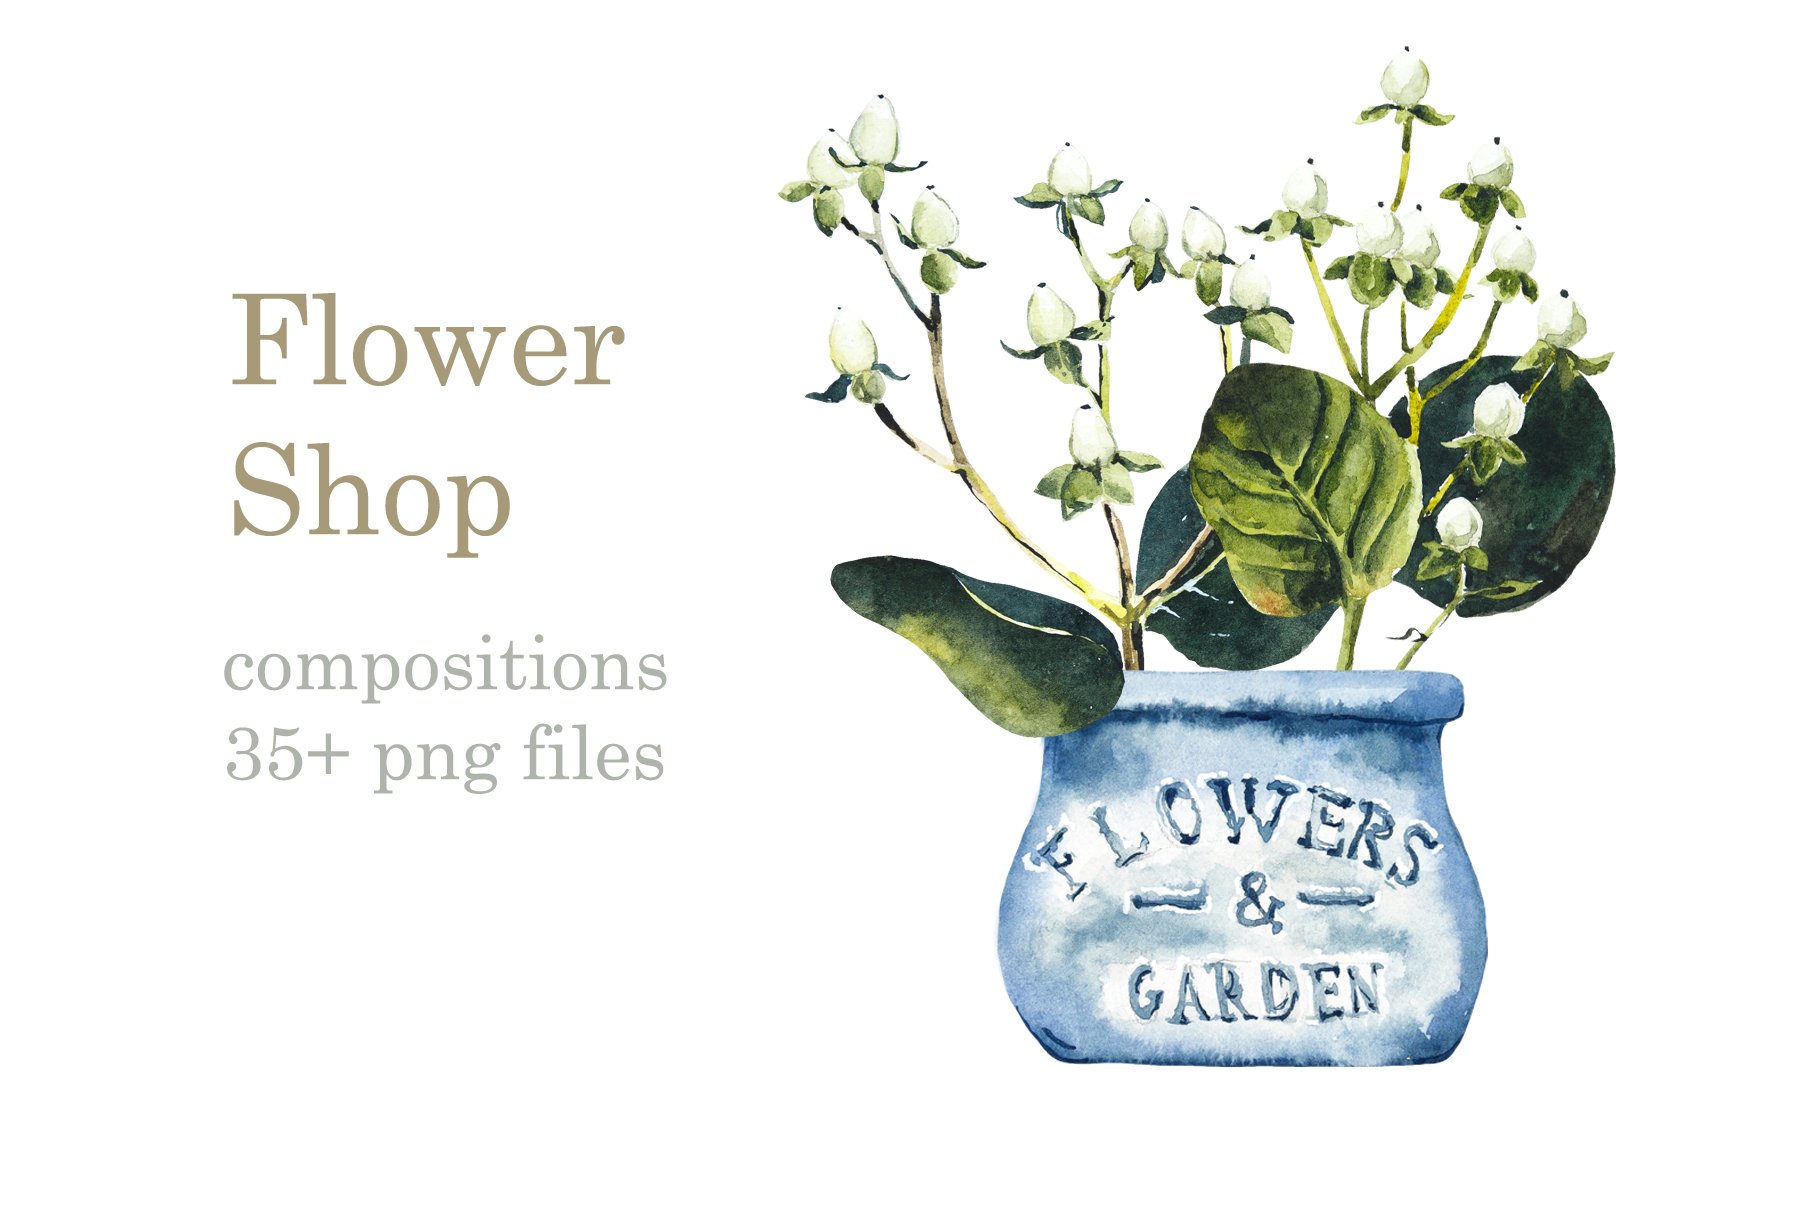 Watercolor Flower Shop cover image.